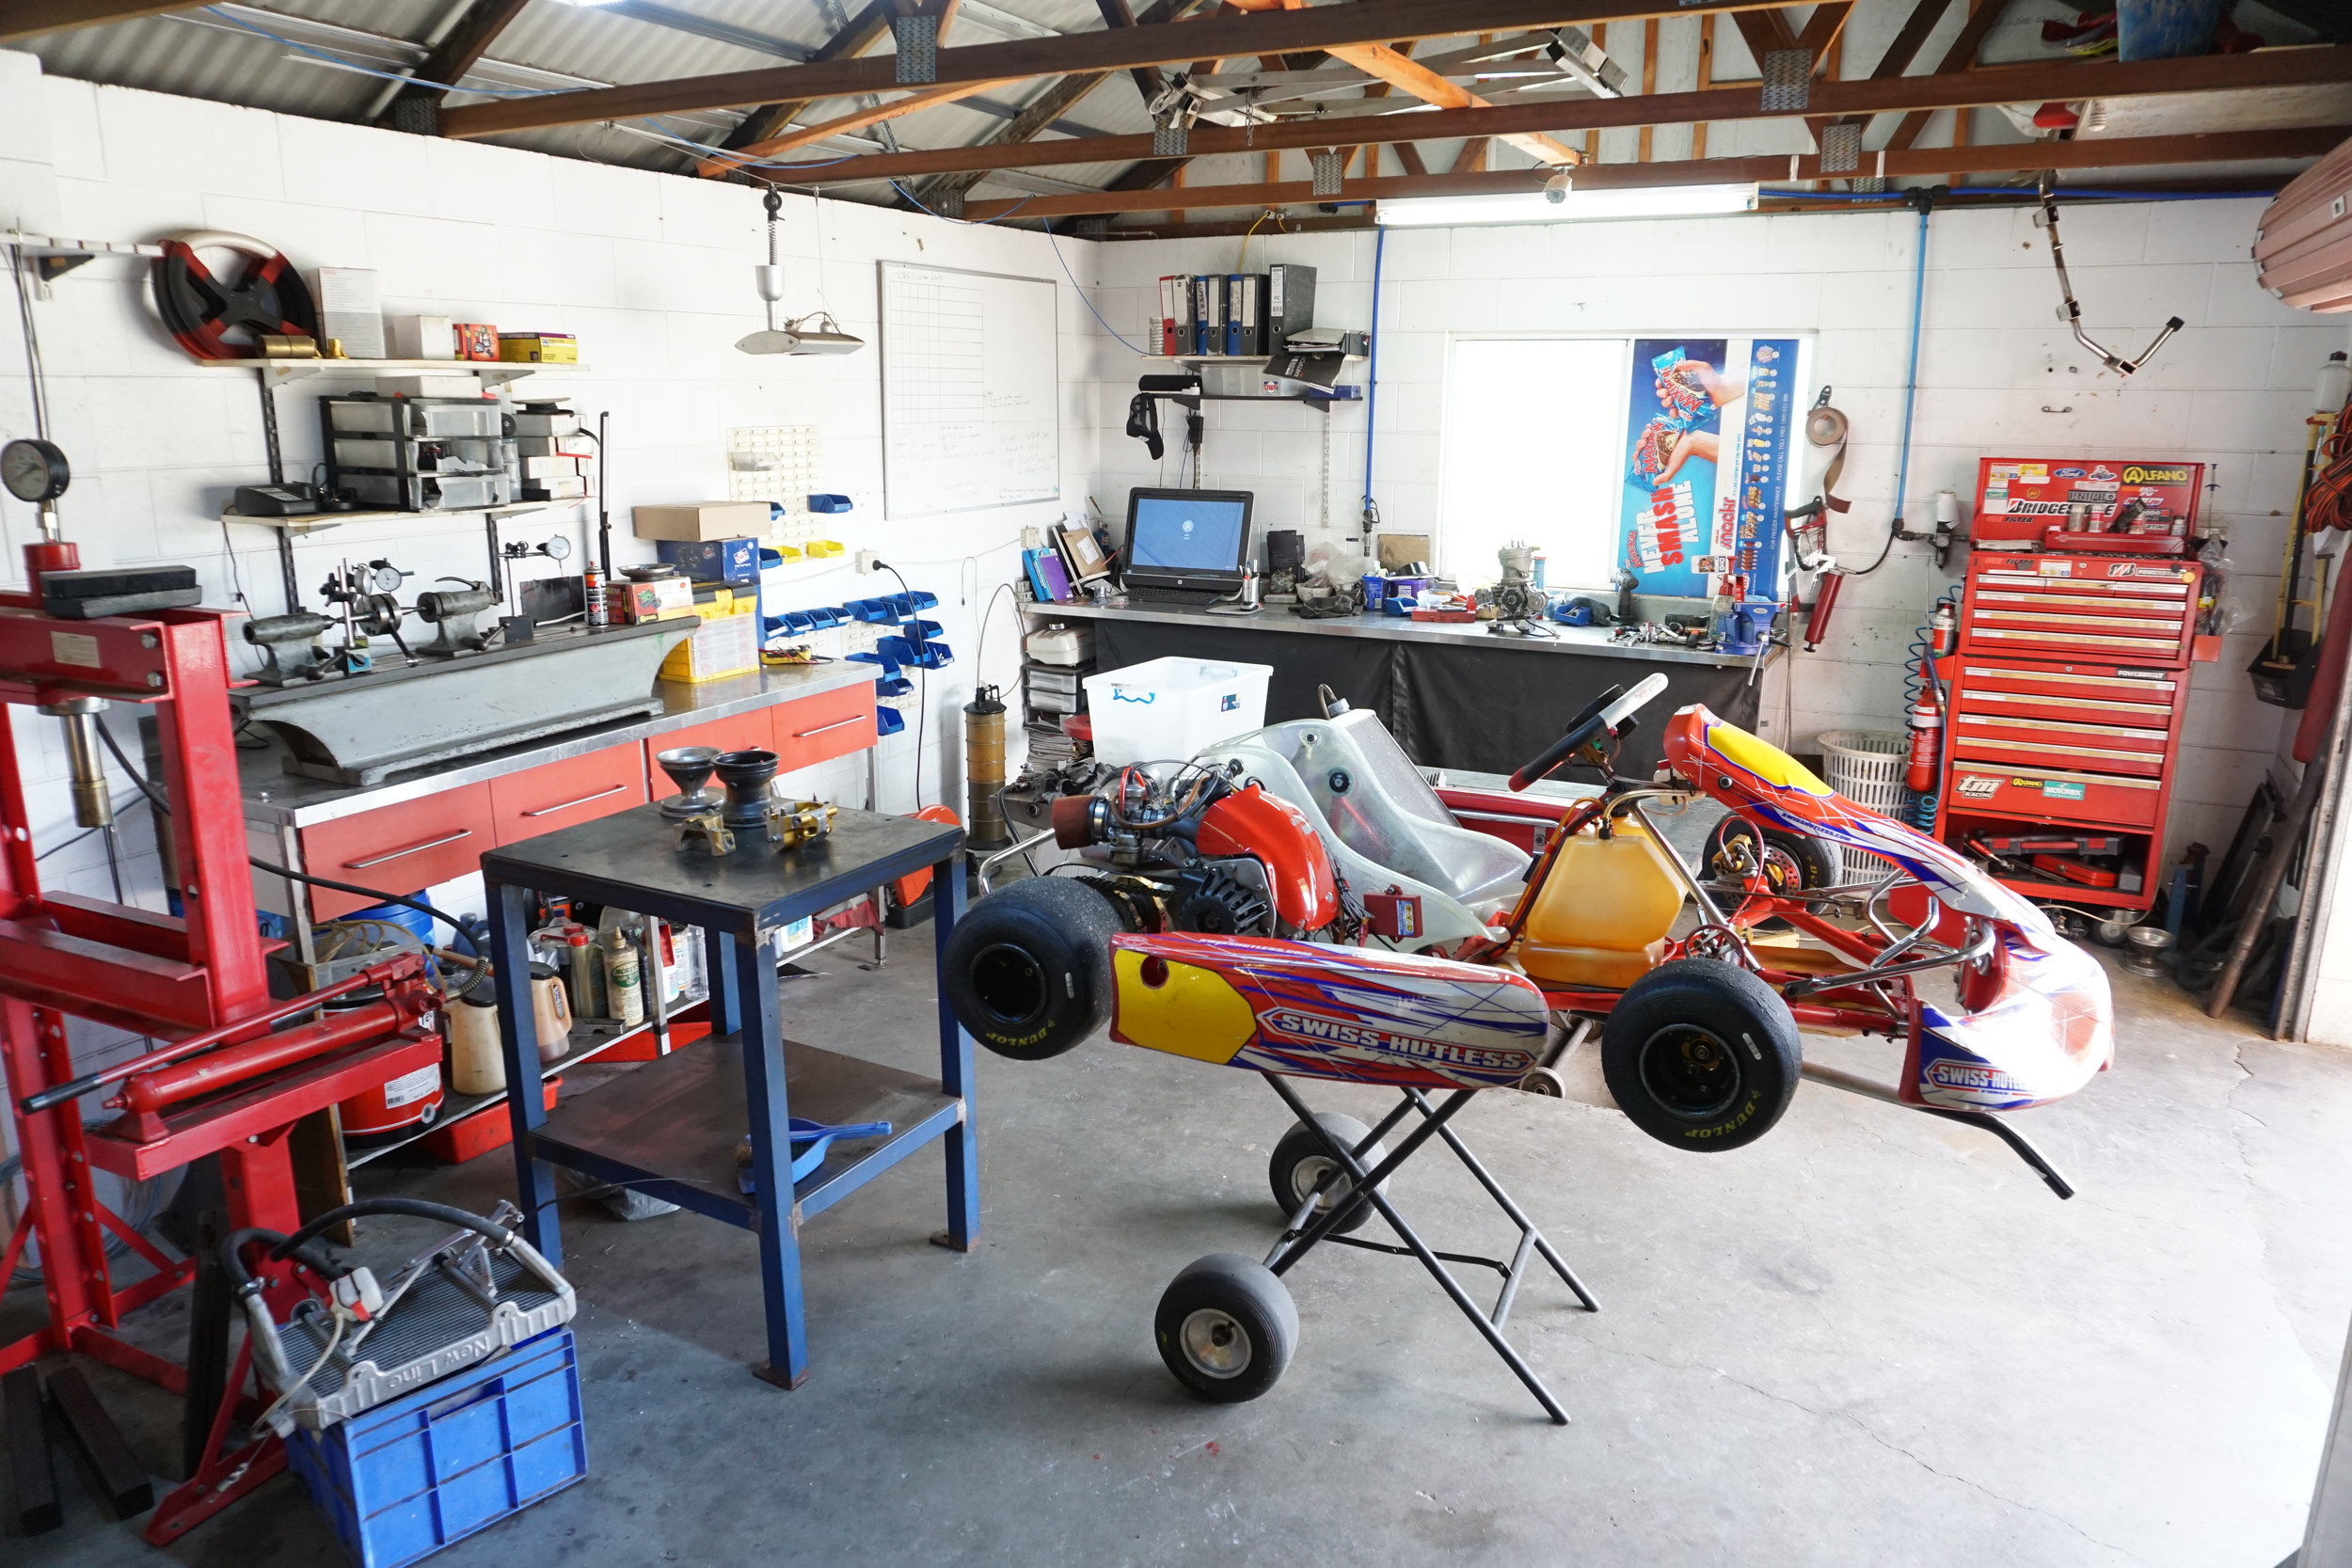 Kart Sales Service Repairs, The Kart Shop